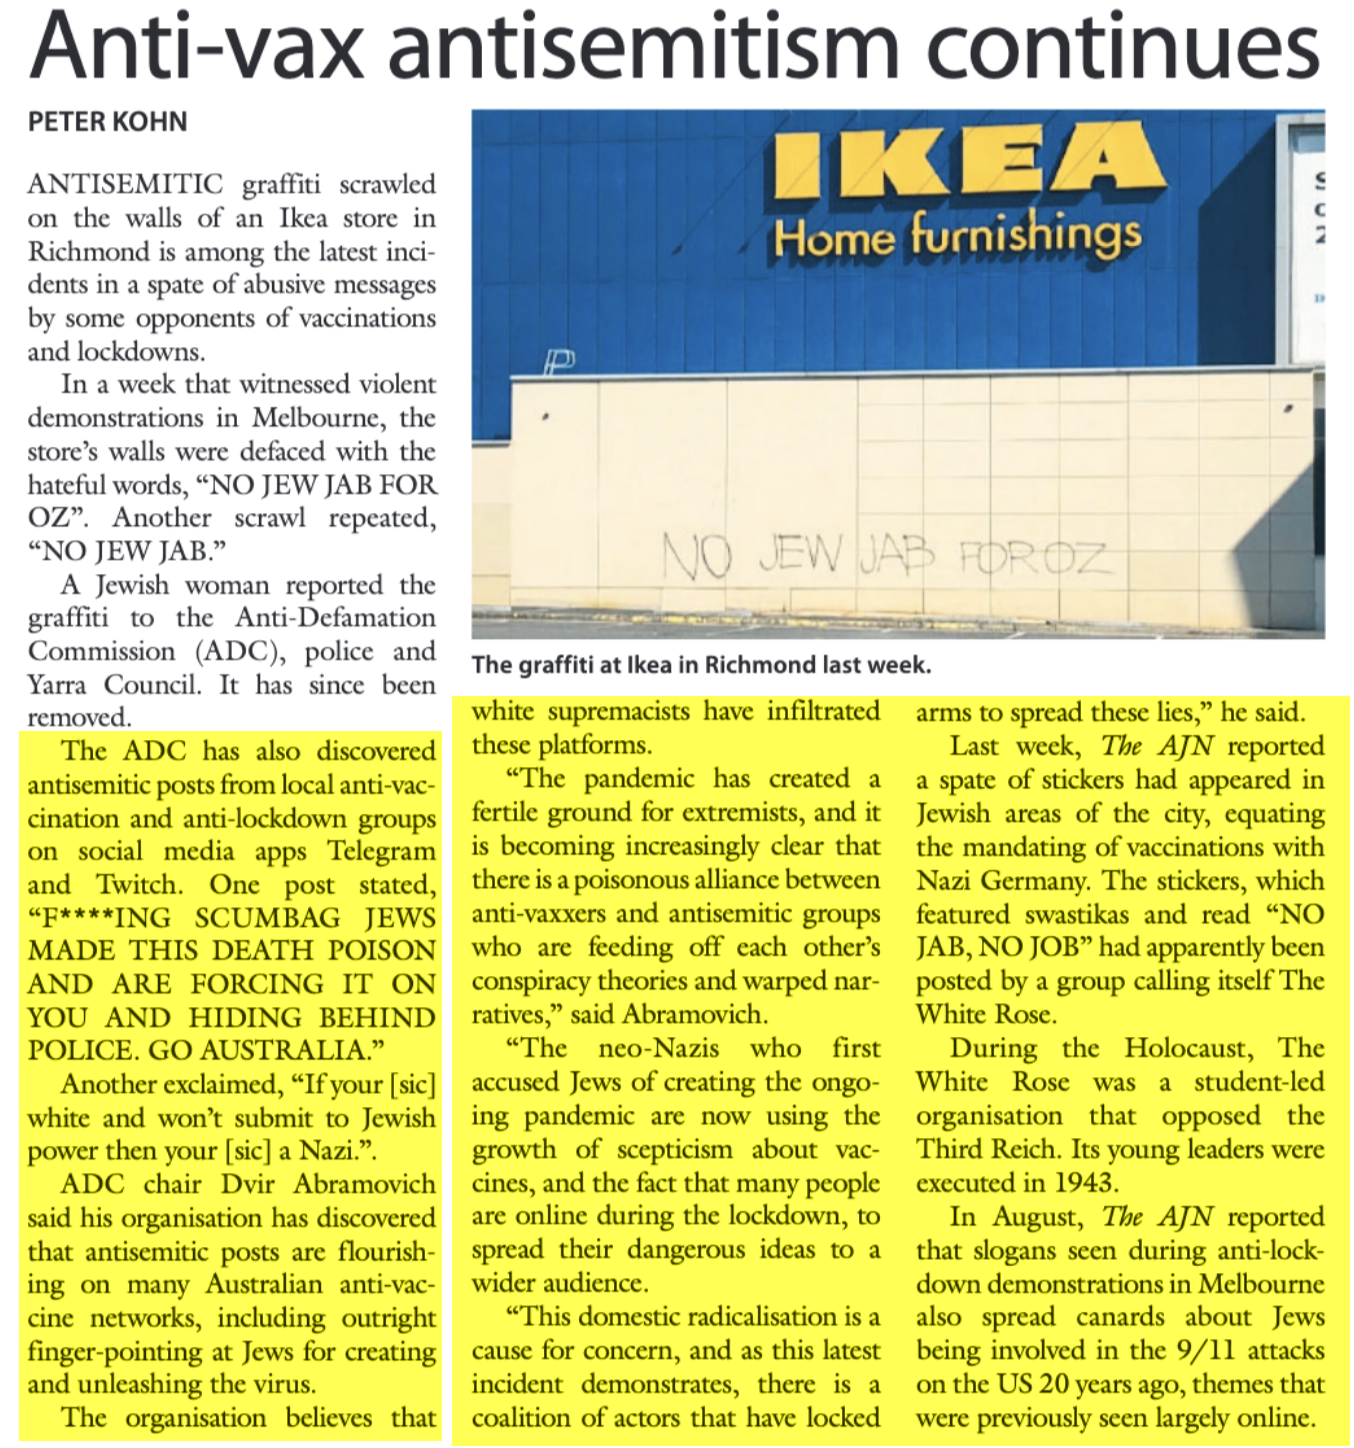 Anti-vaxx antisemitism in Australia surging